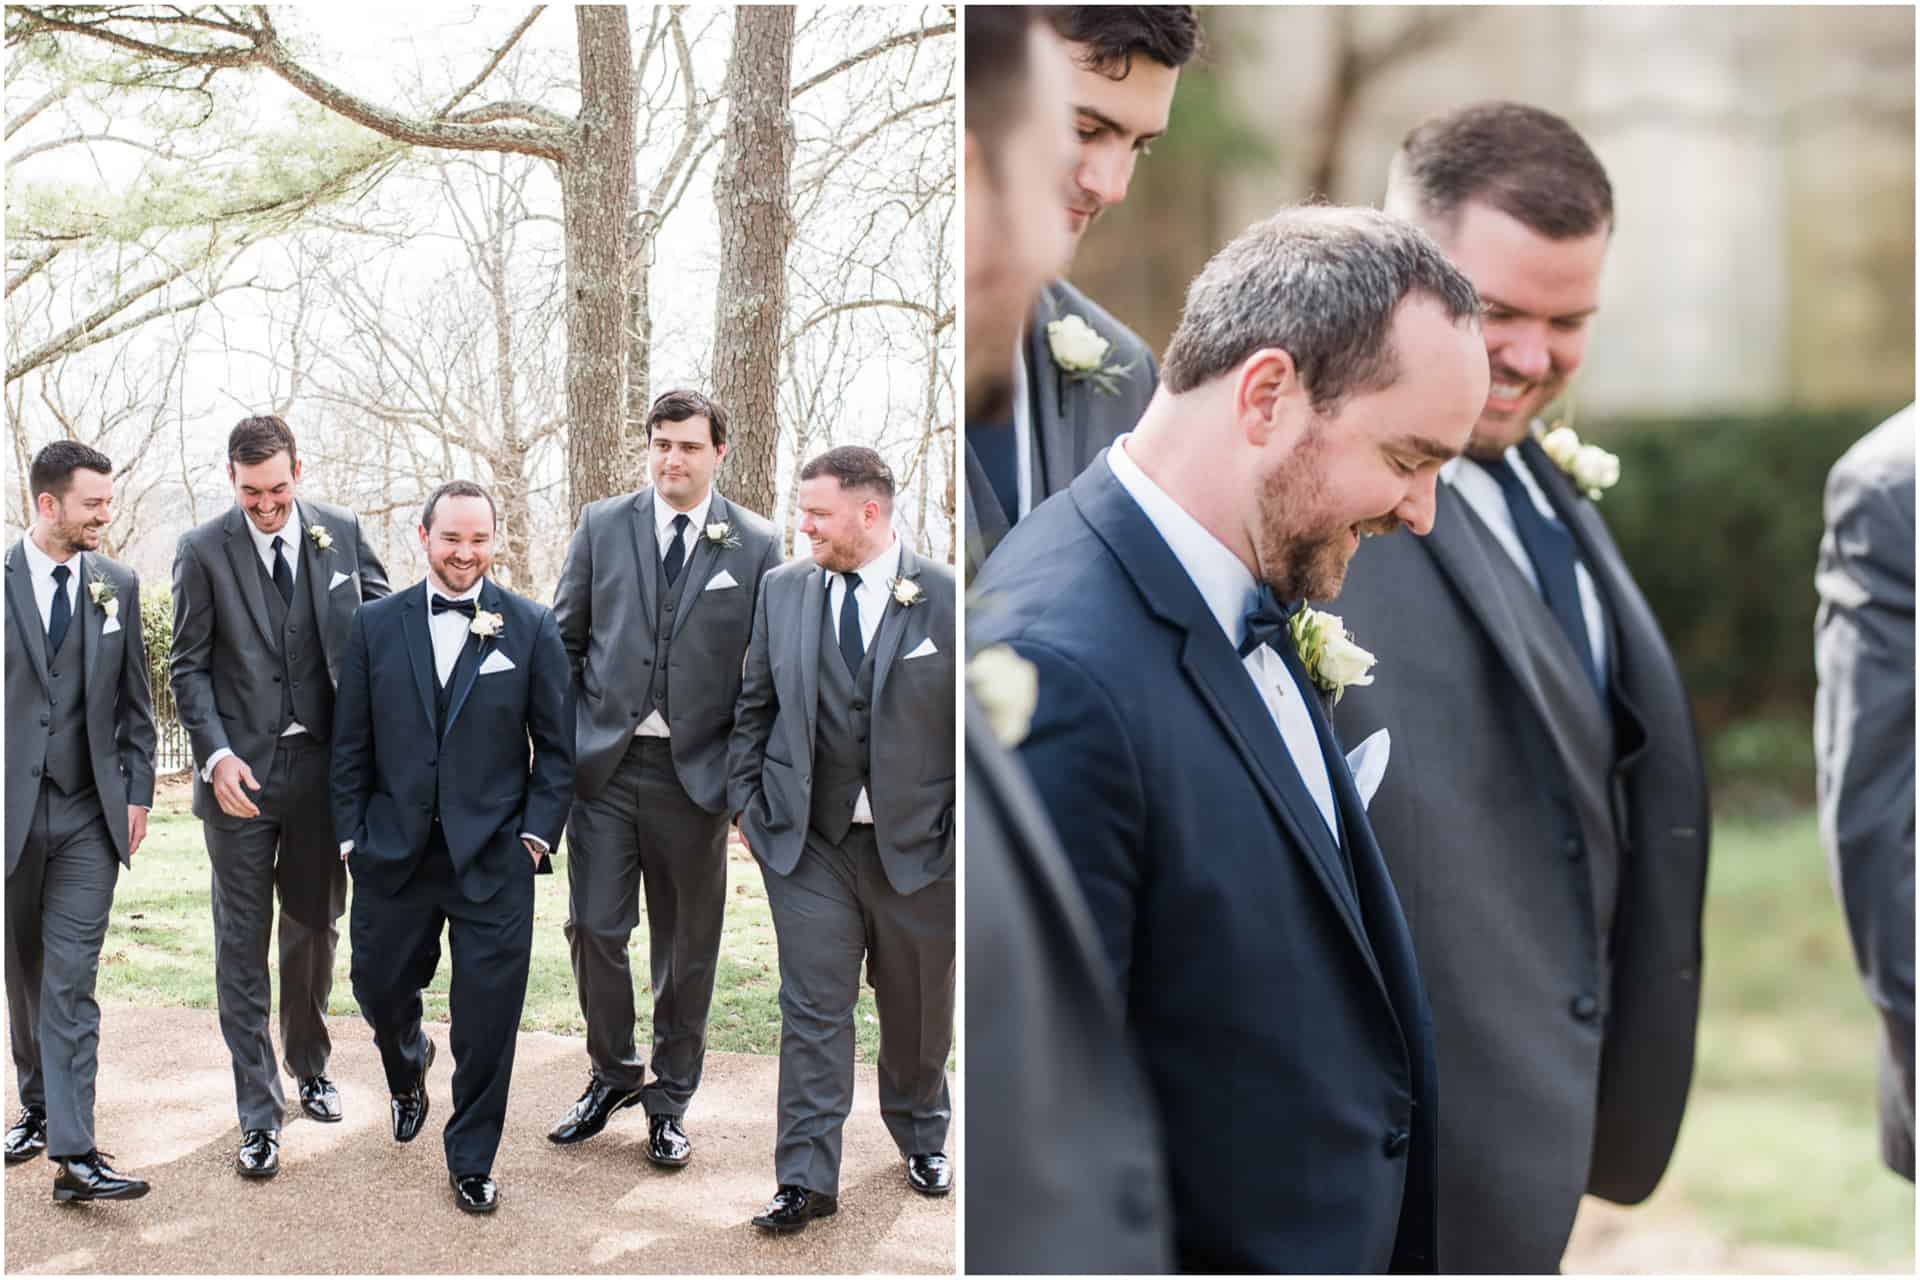 15 Groom And Groomsmen Walking Navy Suit Grey Suits Burritt On The Mountain Winter Wedding